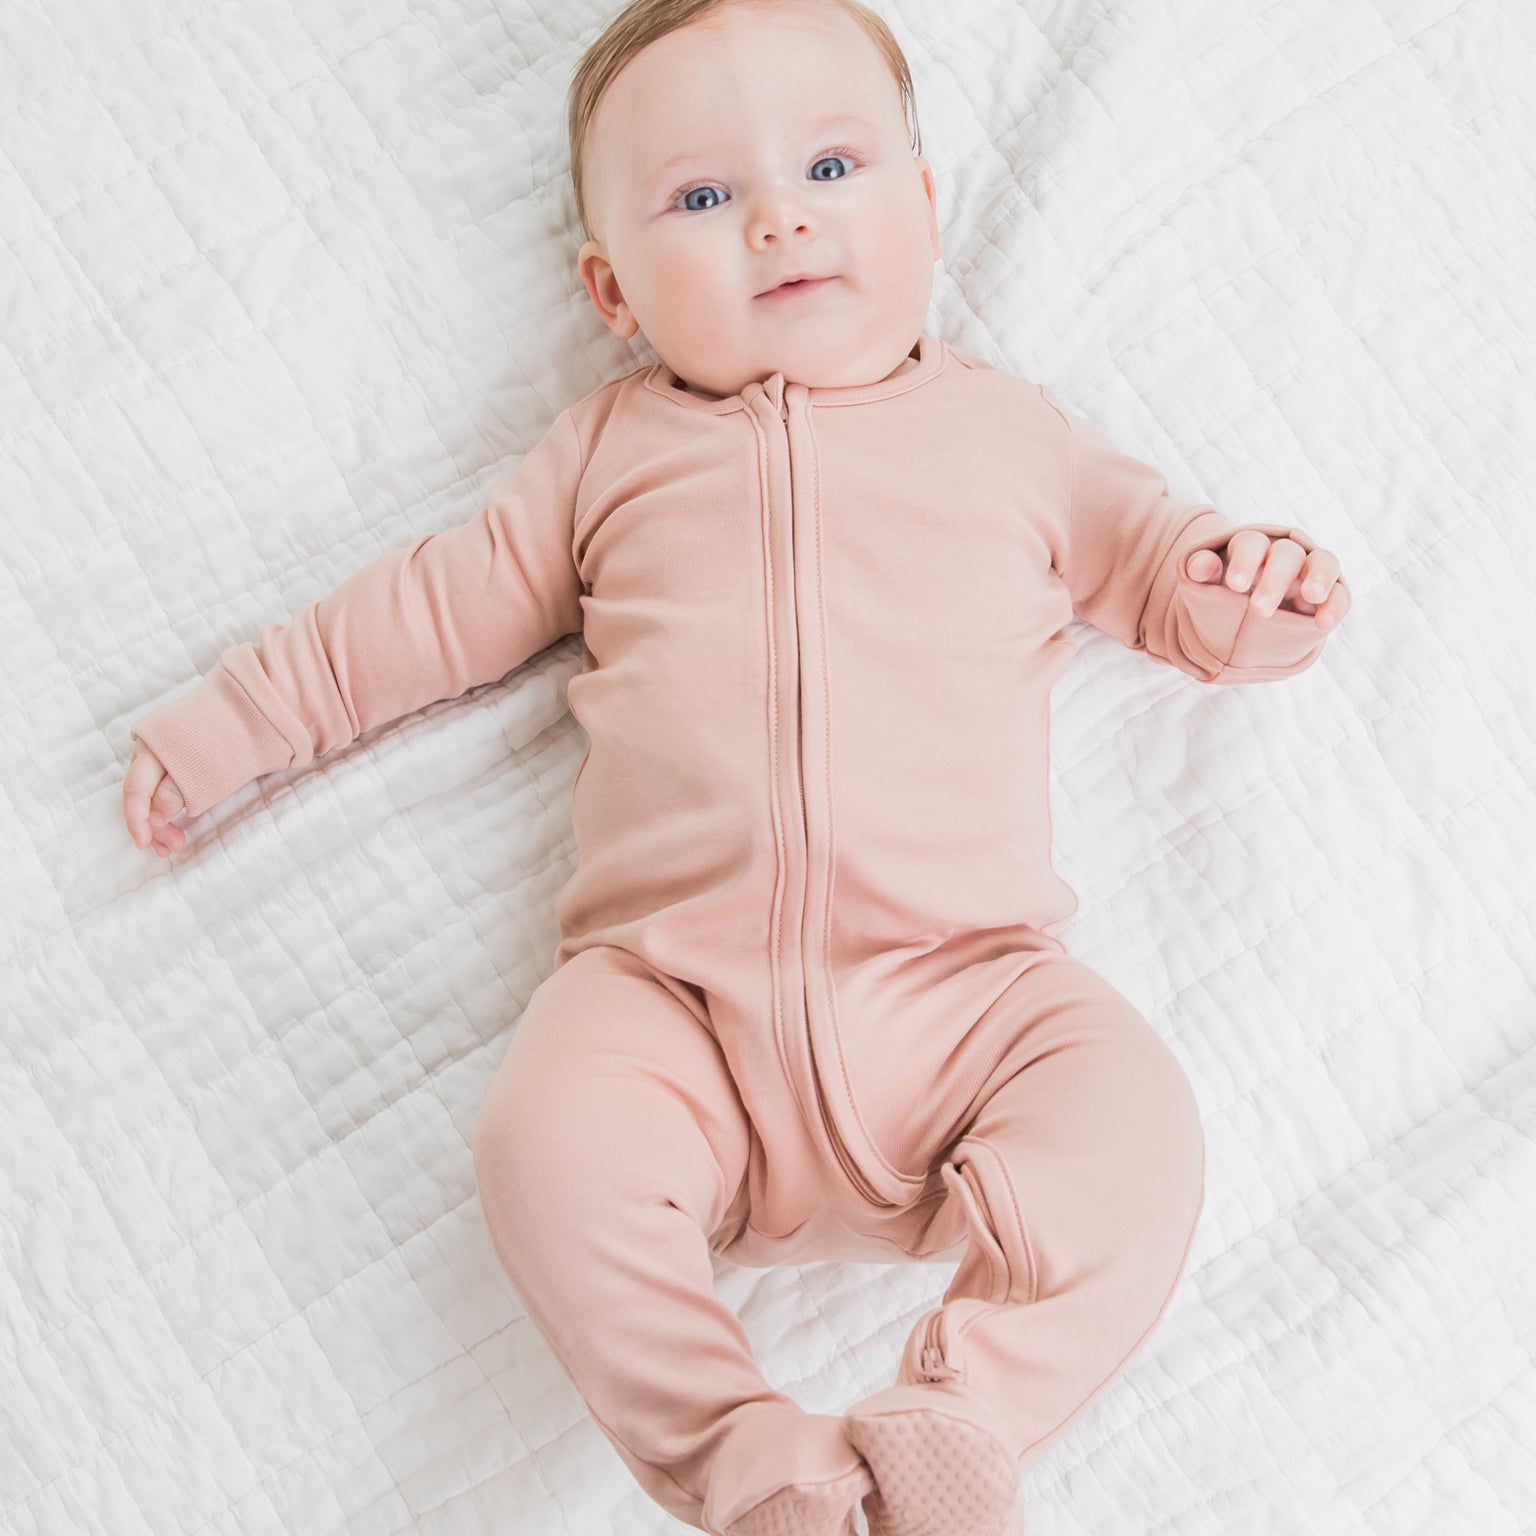 Infant Baby Blush Zipper Sleeper from Colored Organics. Jedbaby